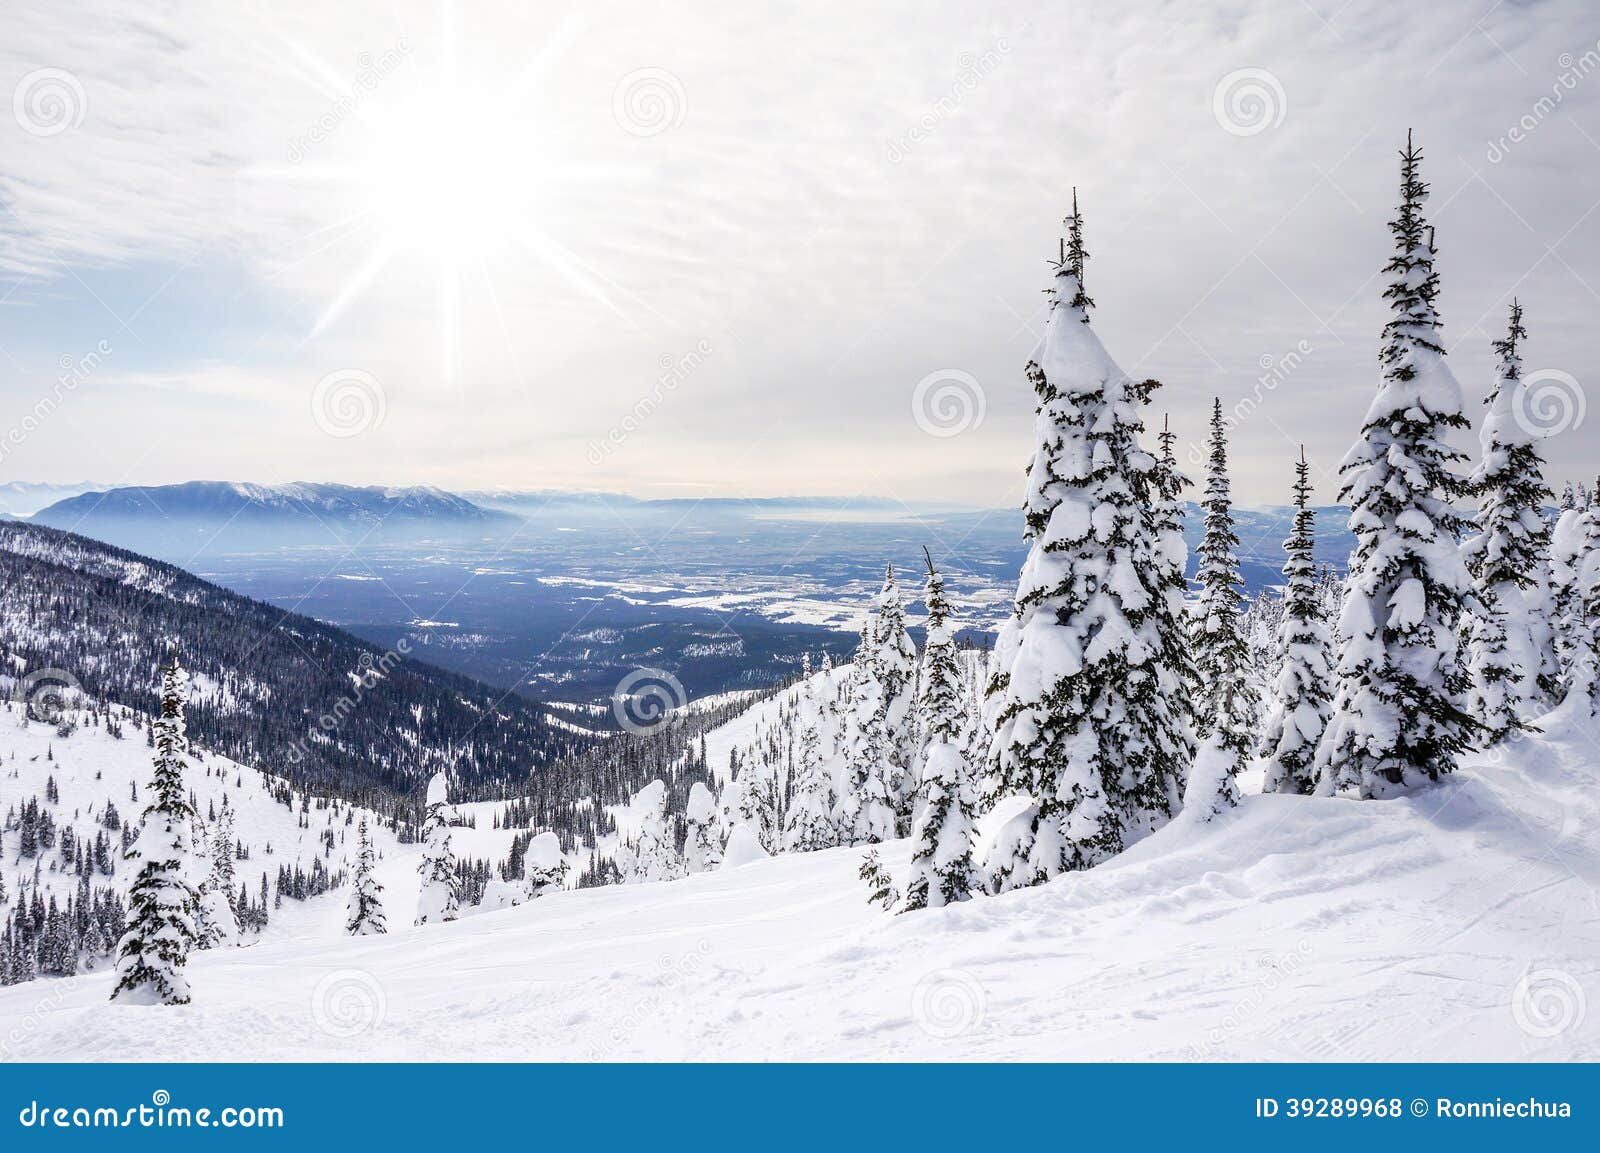 winter landscape on big mountain in montana